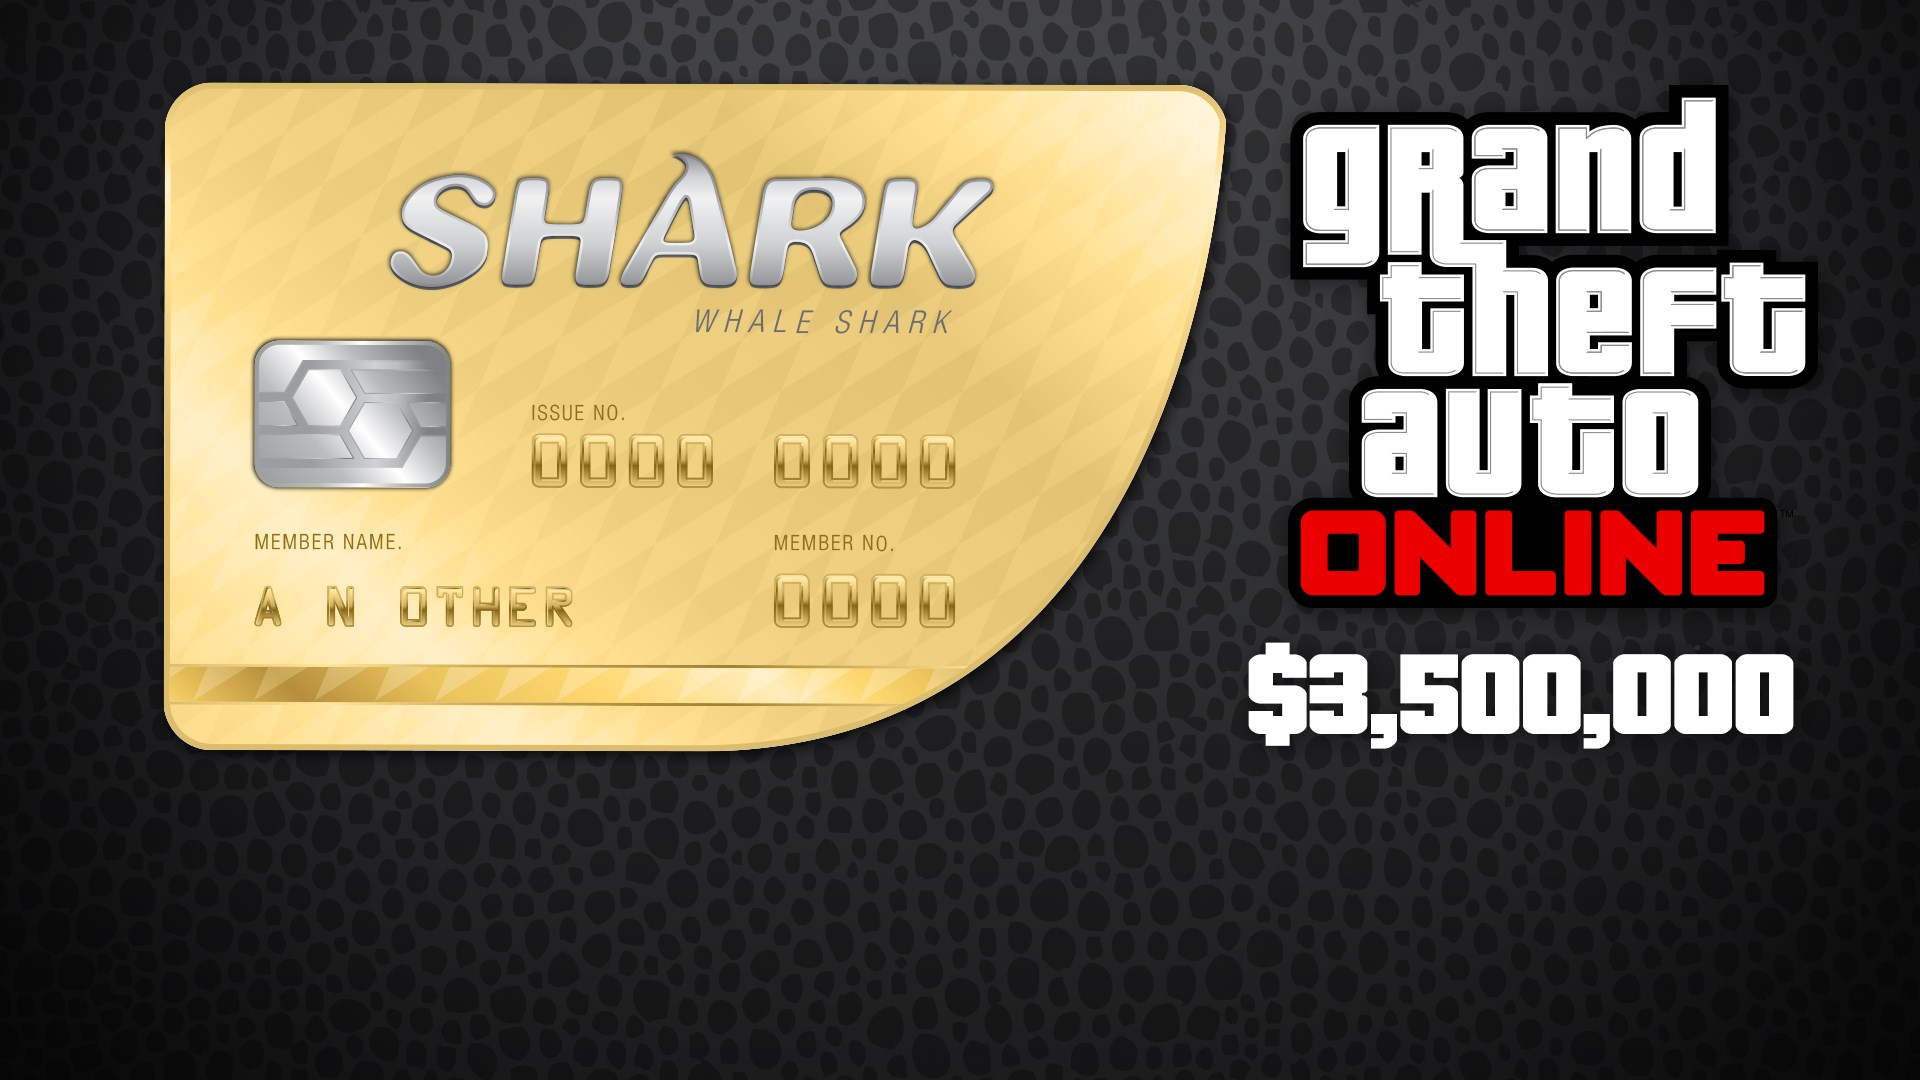 gta shark card deals xbox one